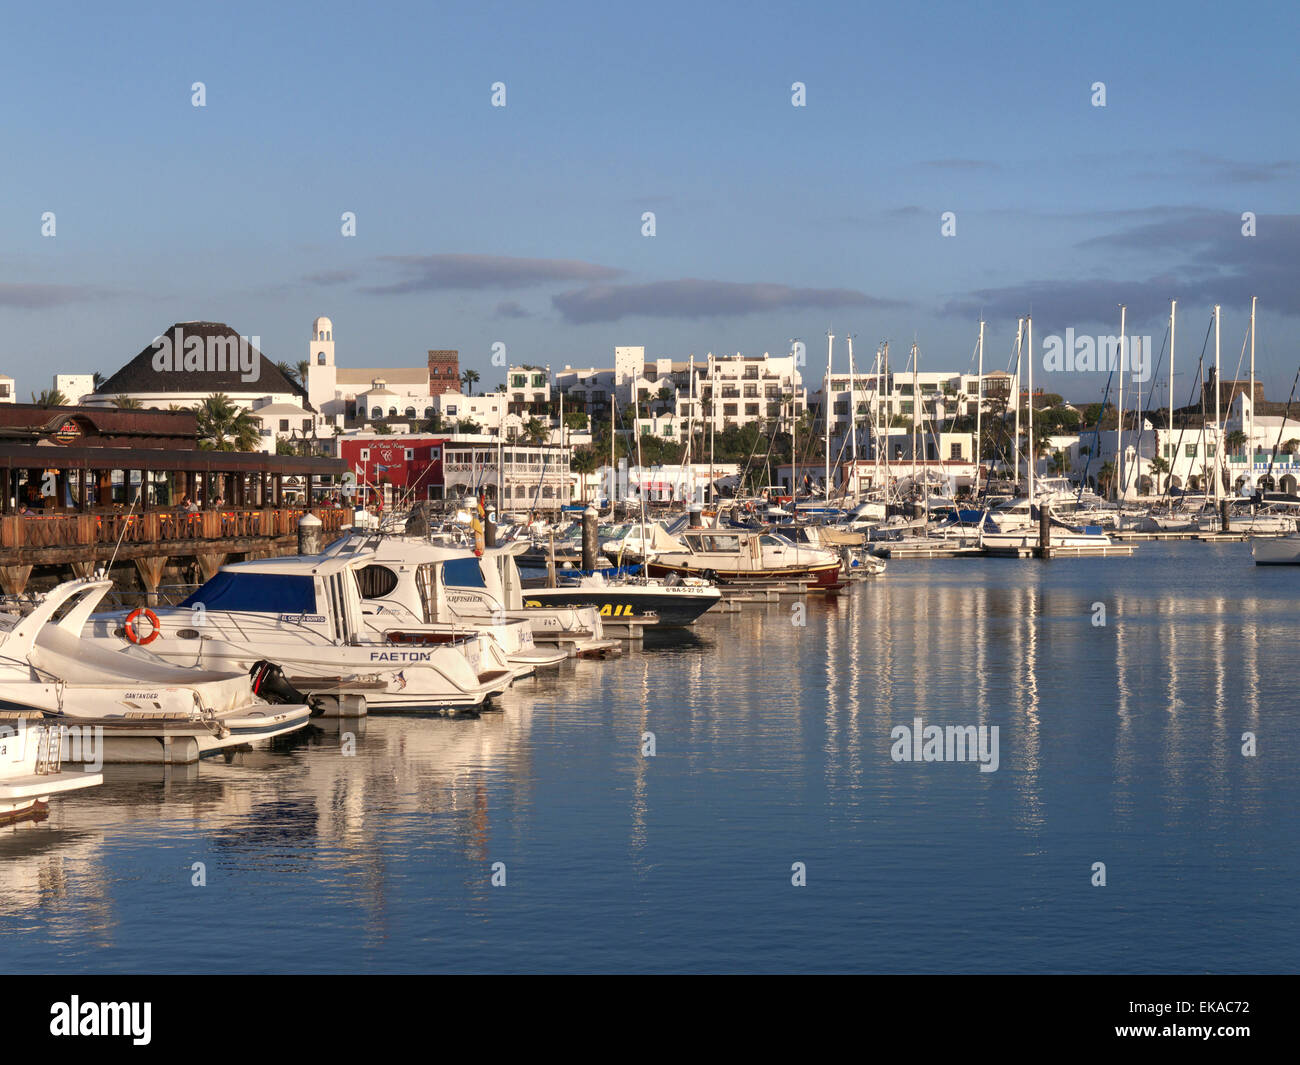 Marina Rubicon Lanzarote  luxury marina and restaurants in warm late afternoon sun Lanzarote Canary Islands Spain Stock Photo